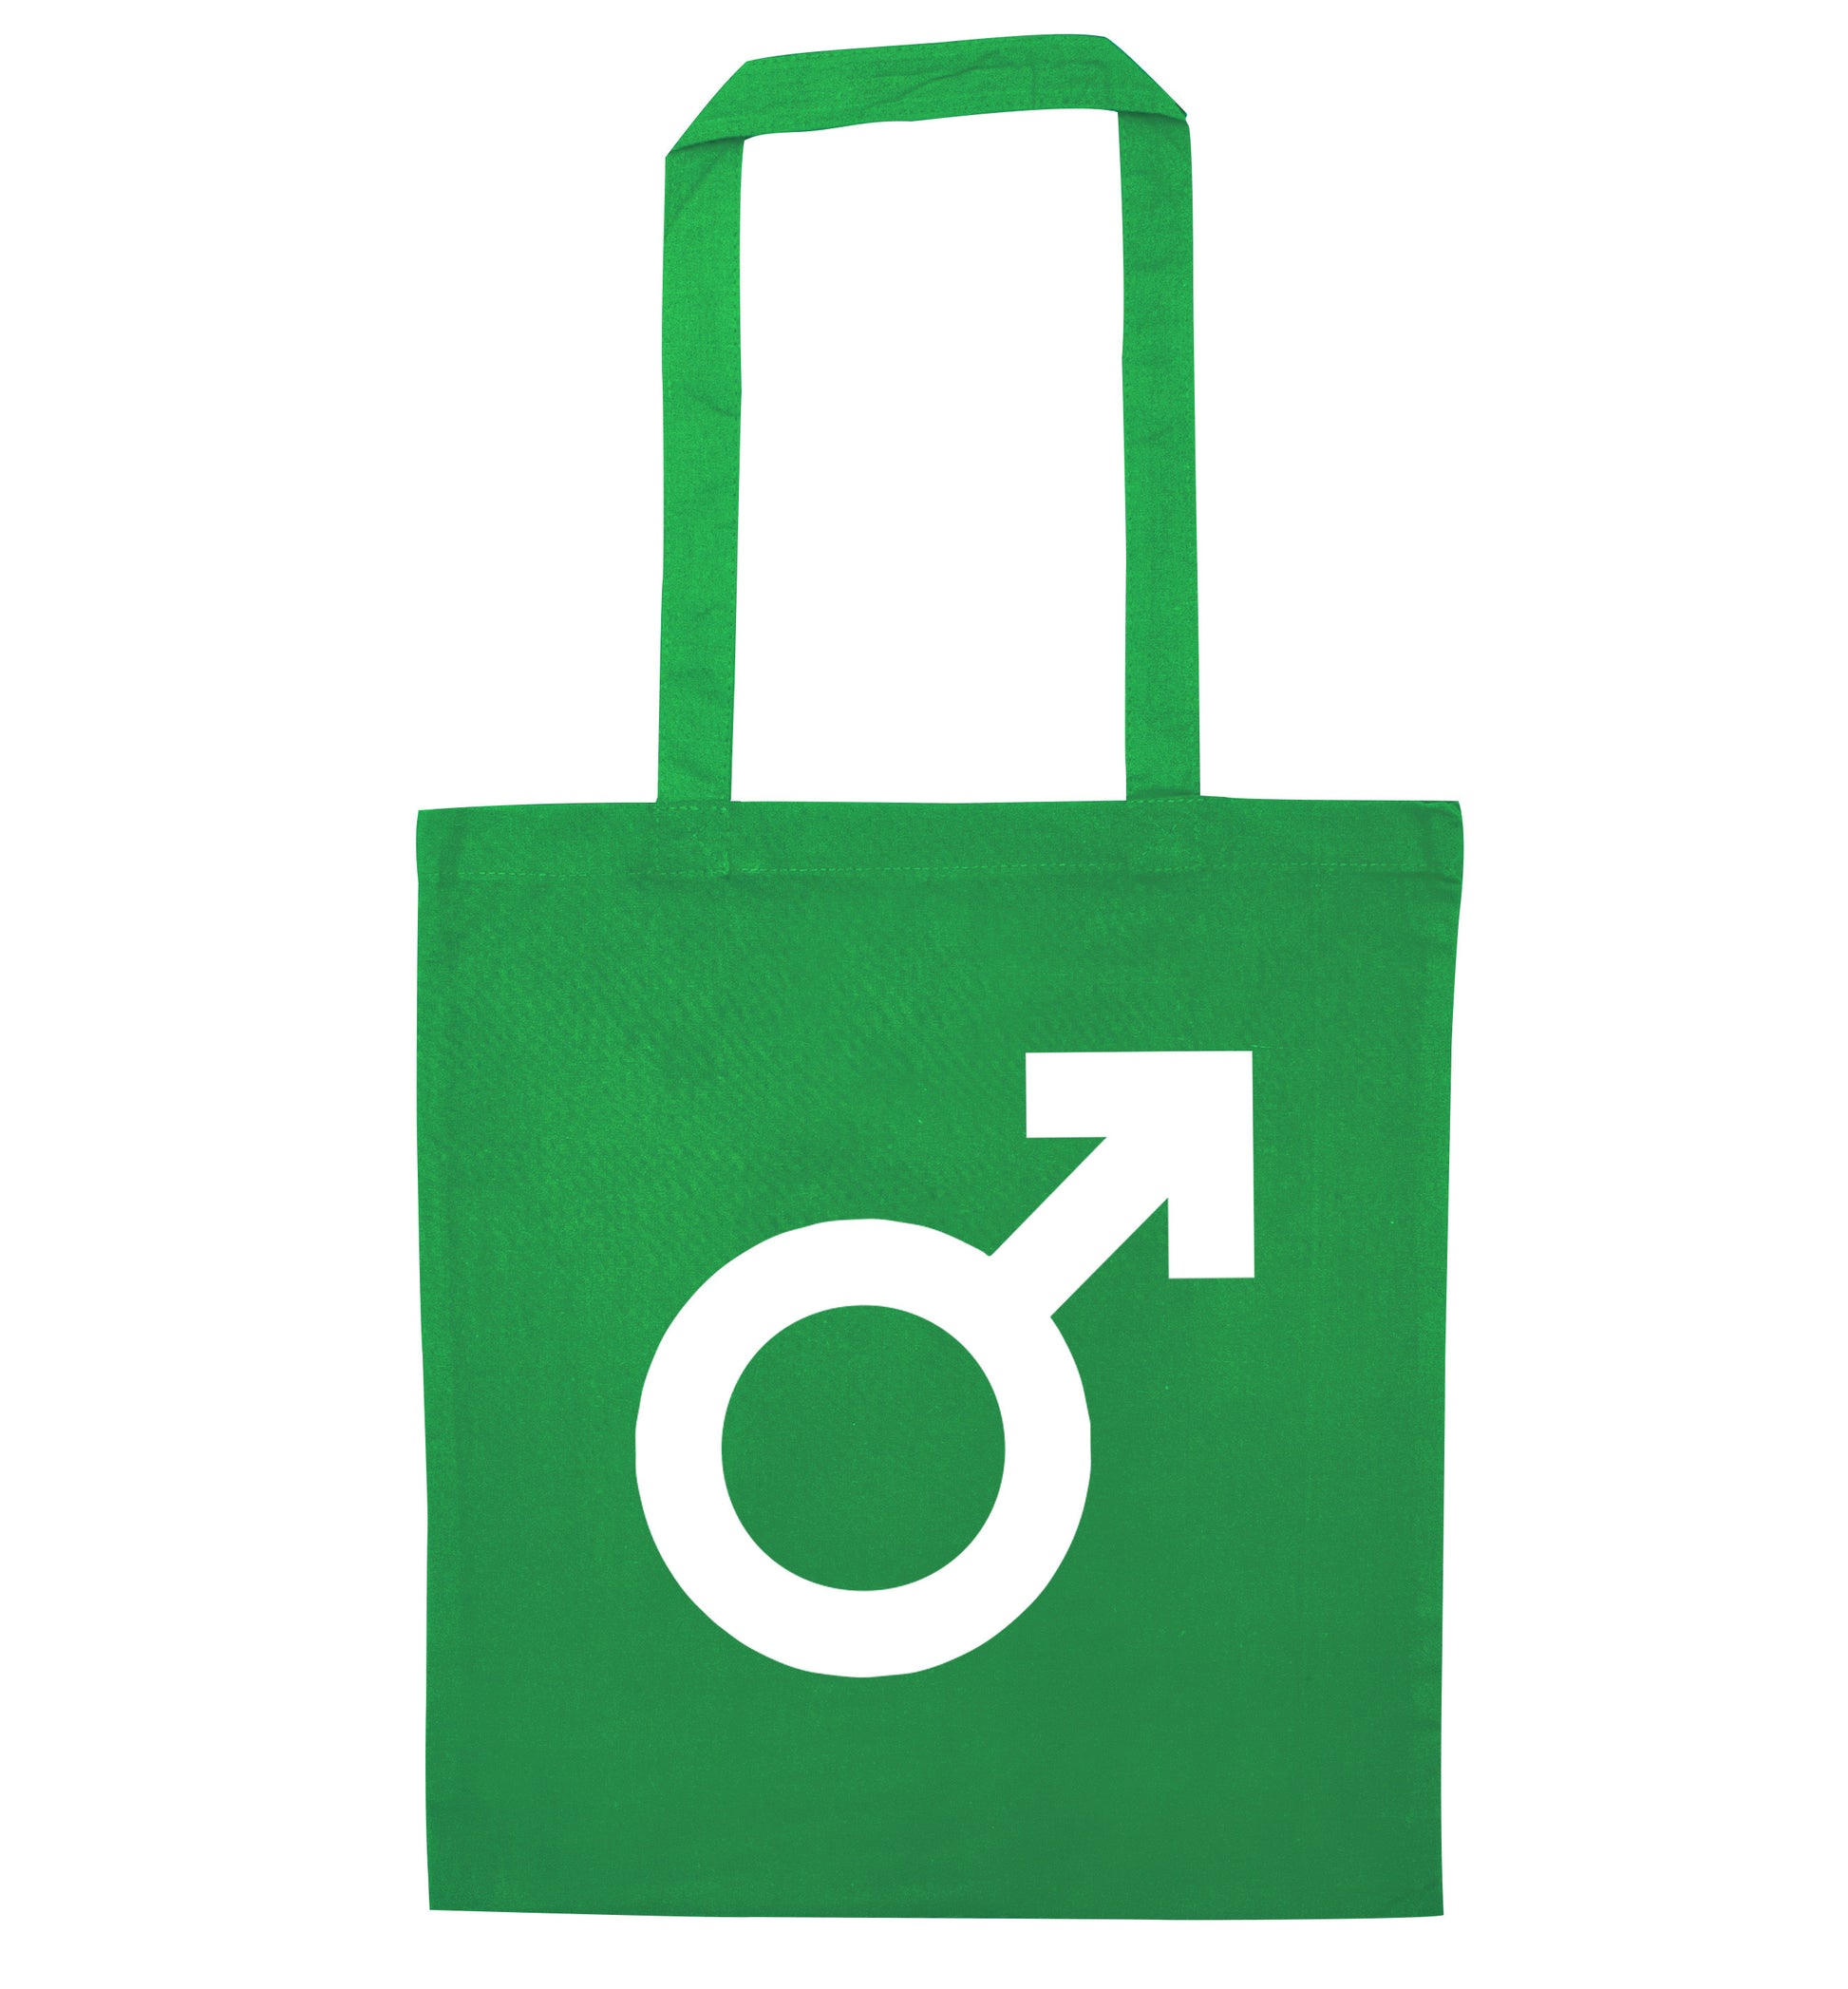 Male symbol large green tote bag